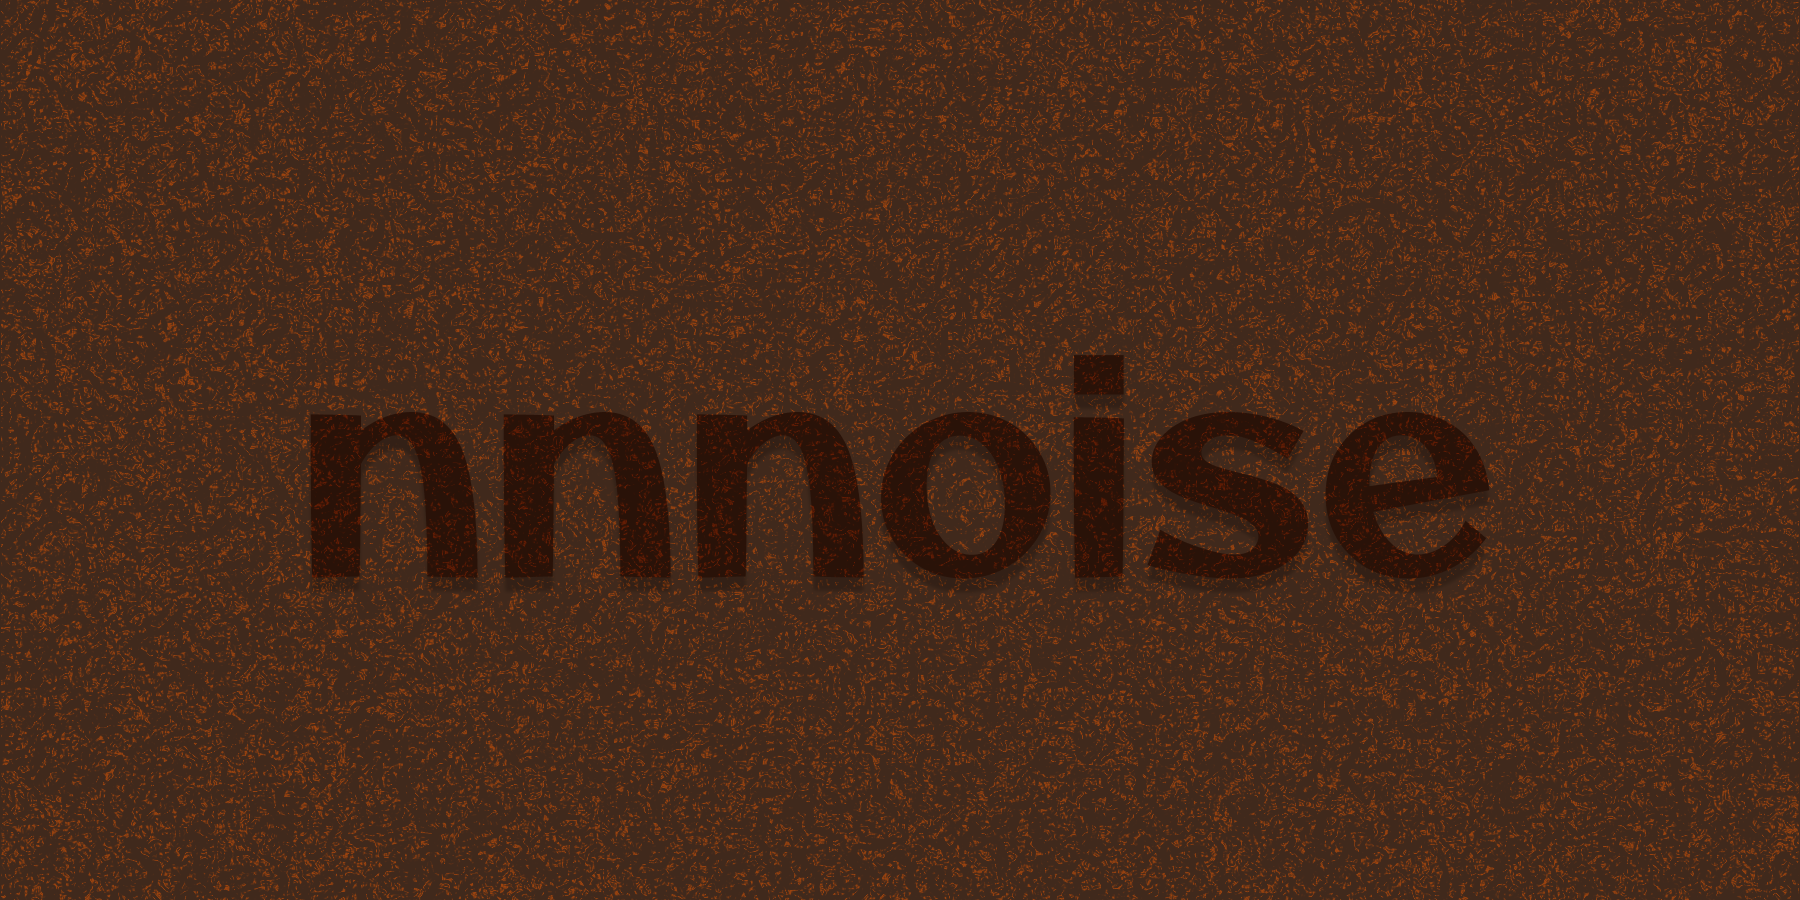 nnnoise: Online SVG Noise Texture Generator